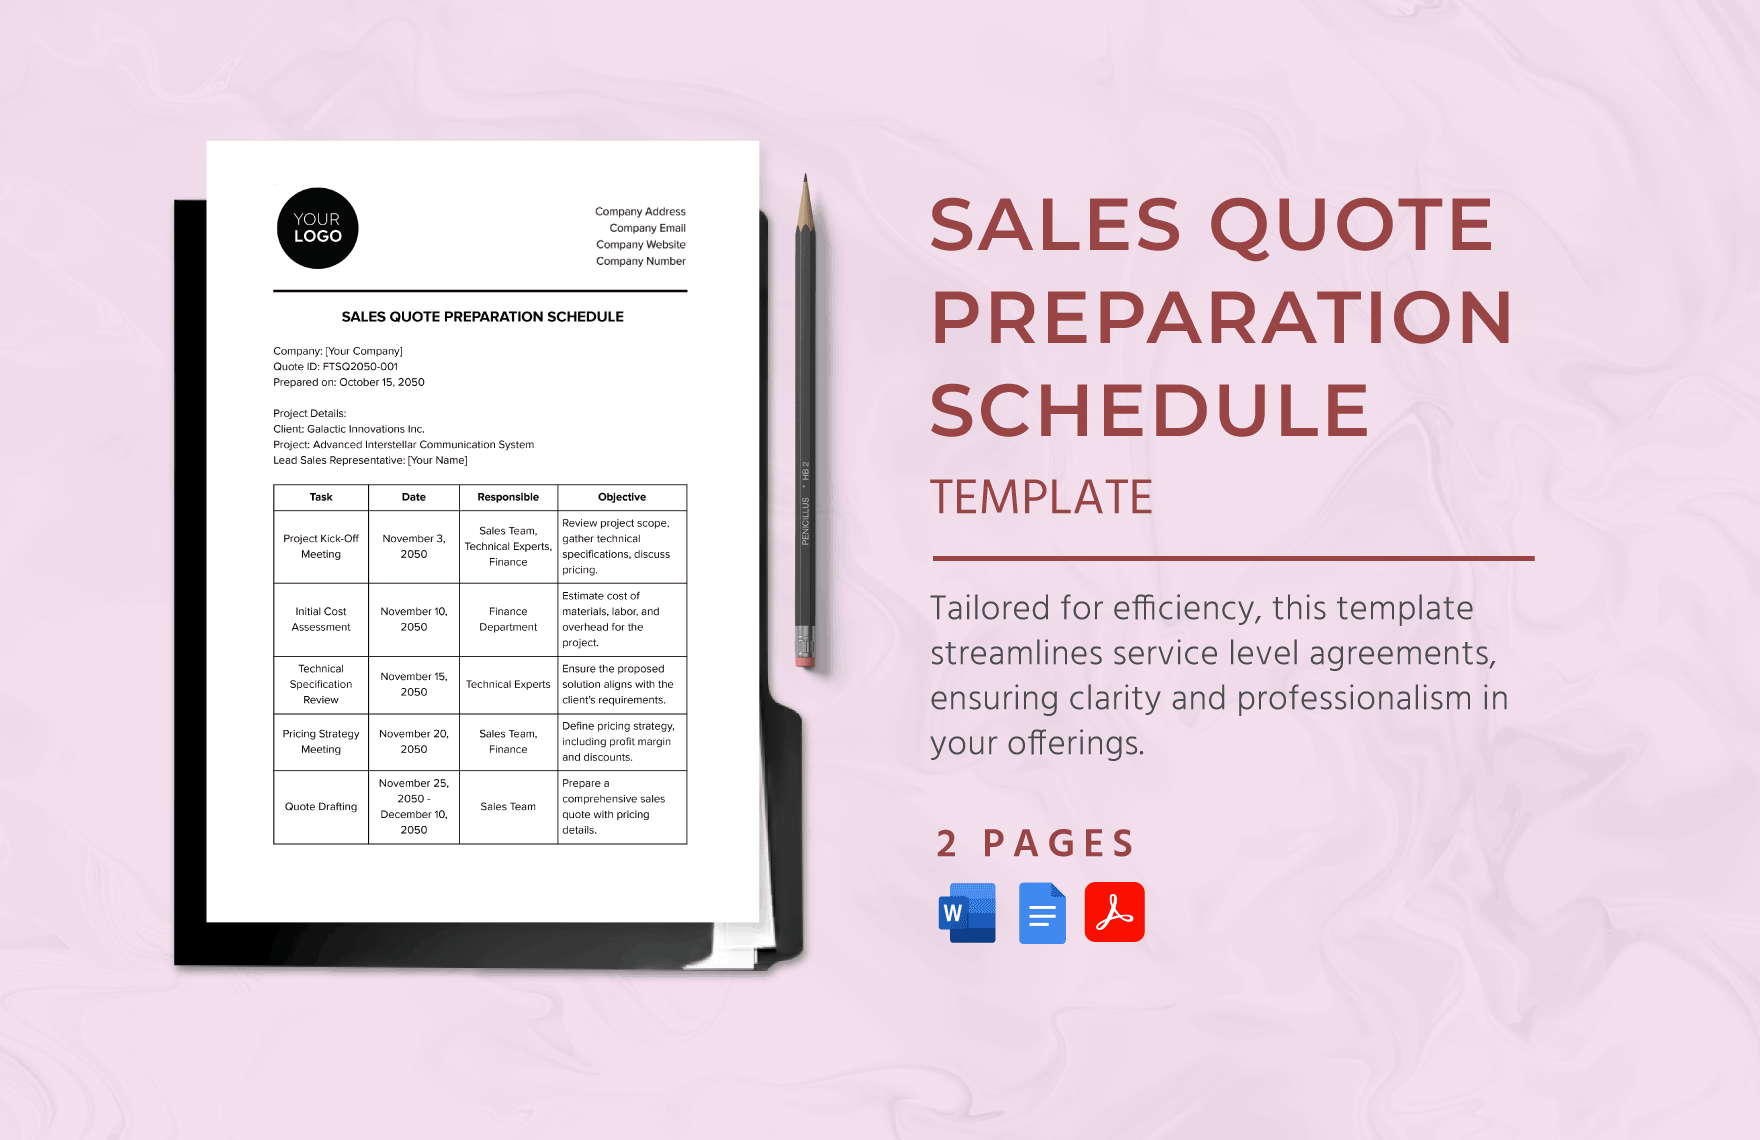 Sales Quote Preparation Schedule Template